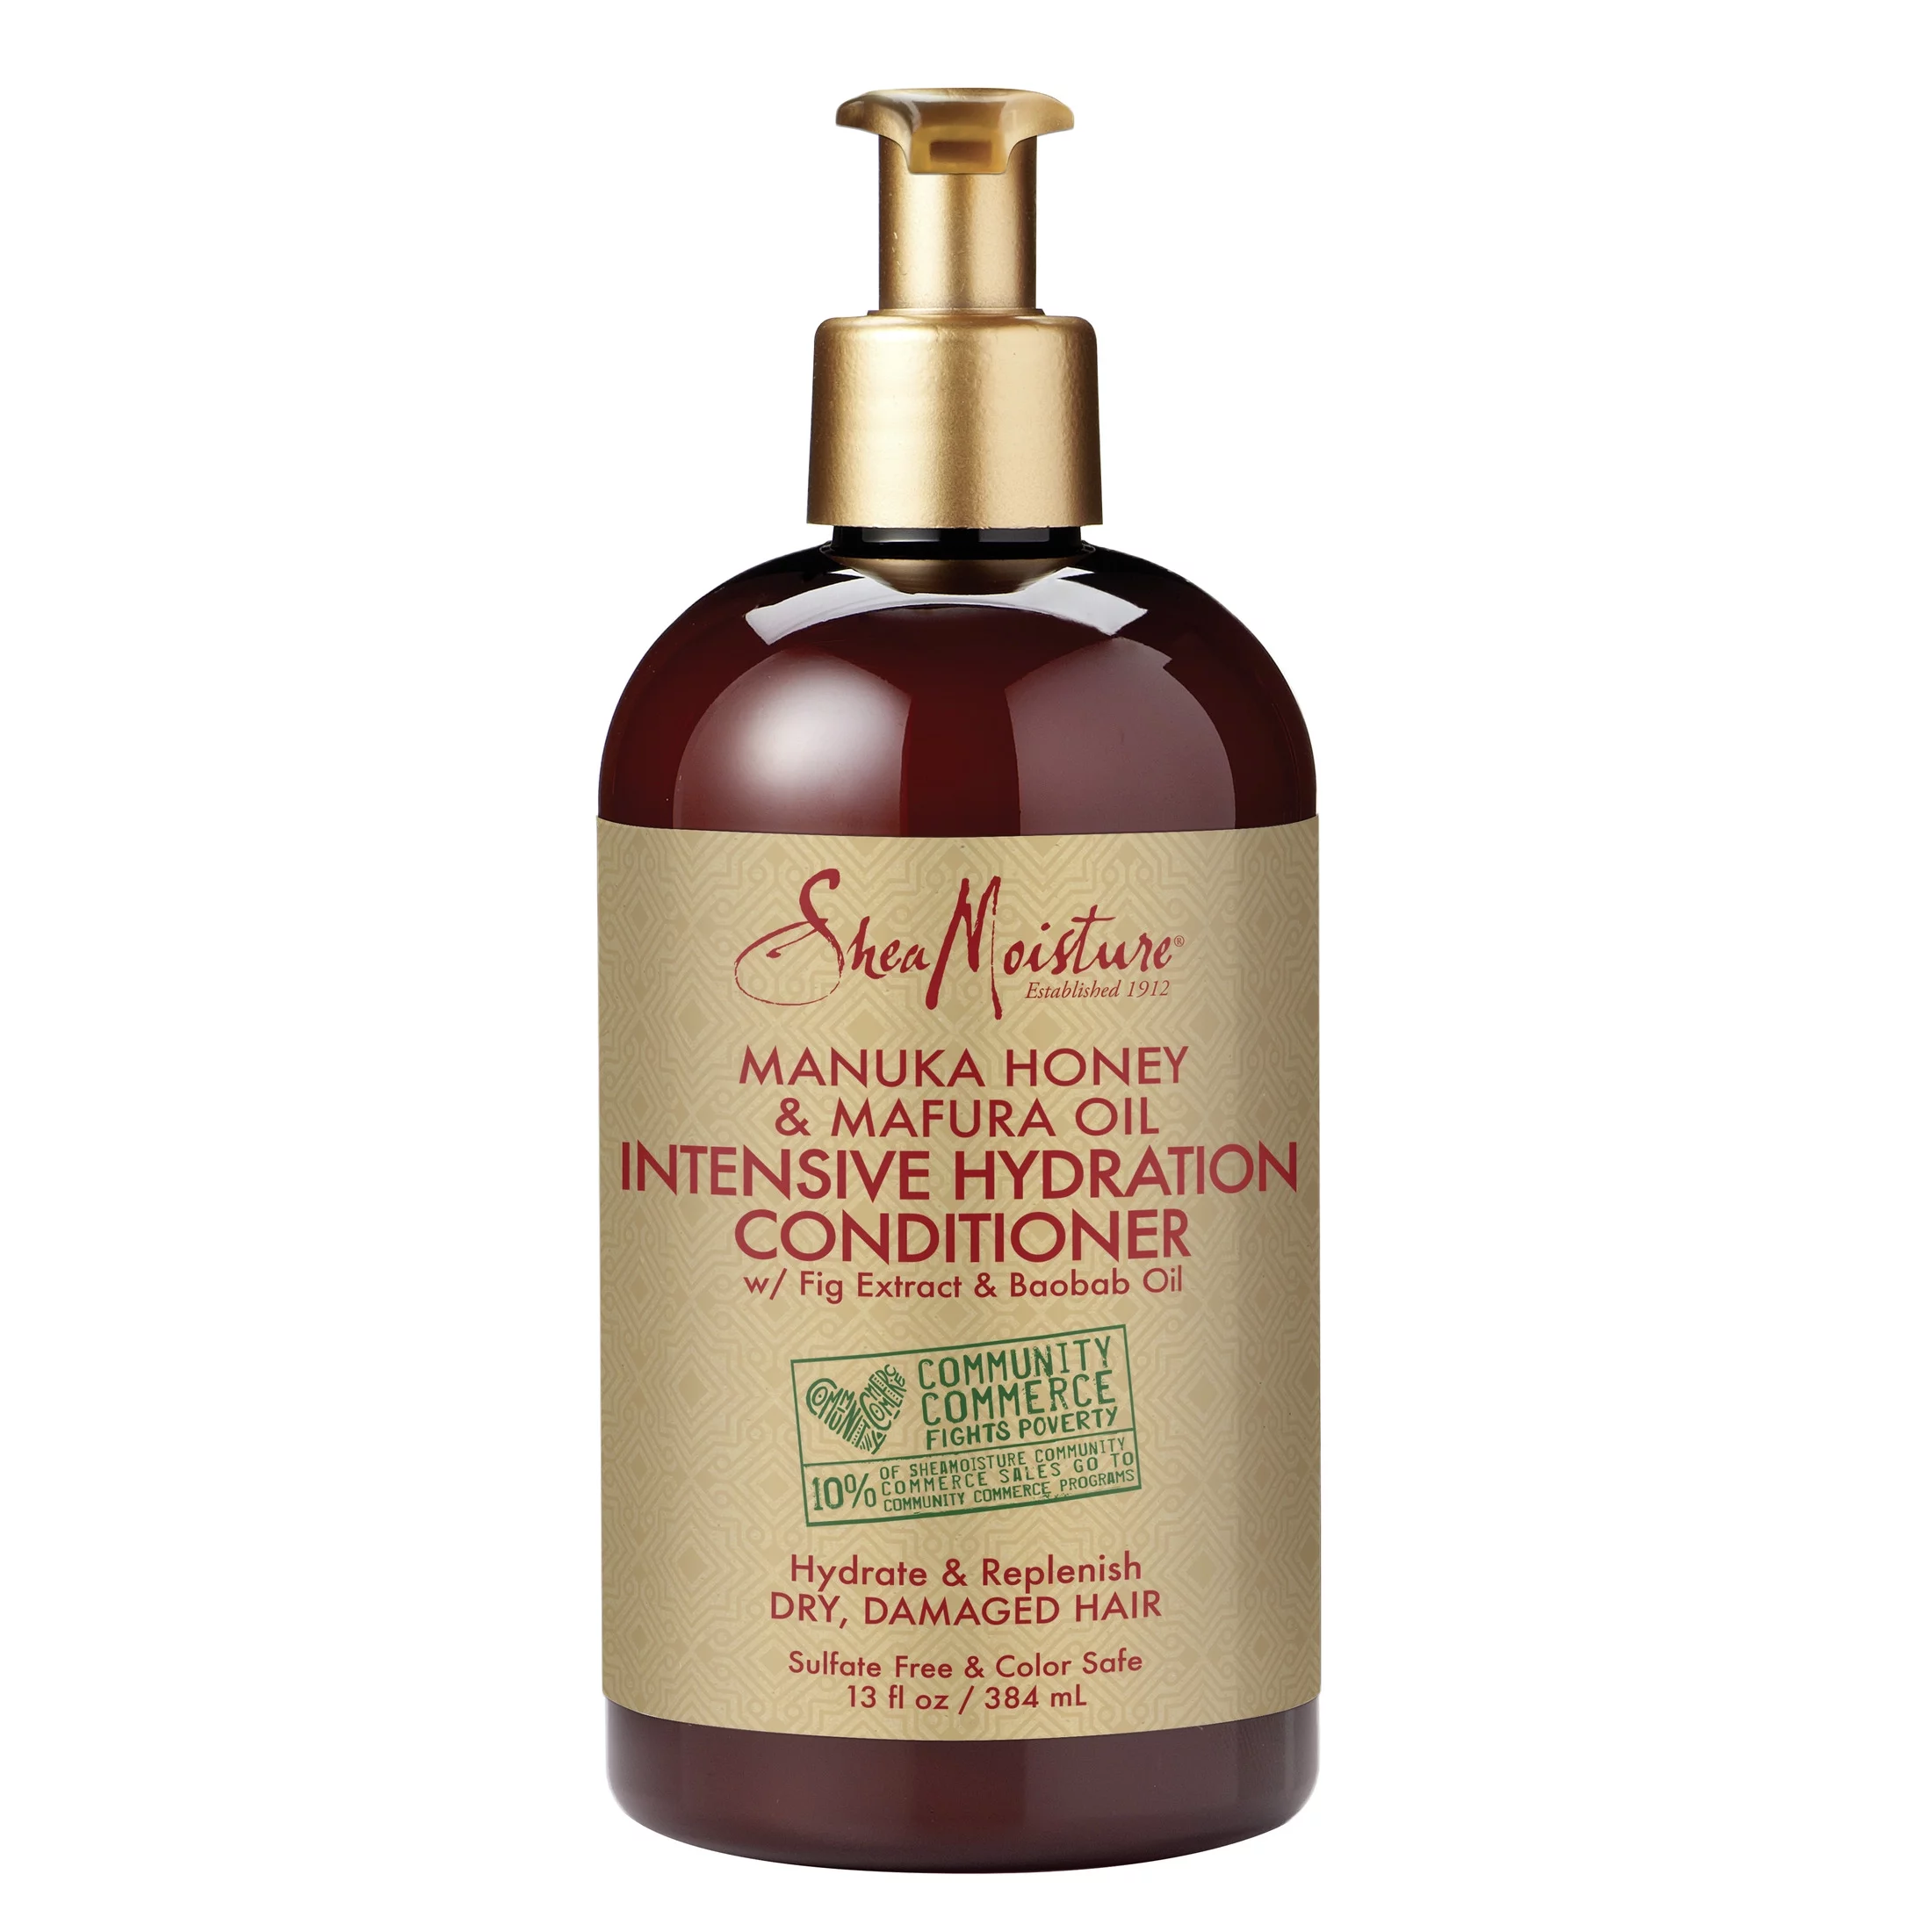 SheaMoisture Intensive Hydration Conditioner for Damaged Hair,, Manuka Honey & Mafura Oil, 13 fl oz